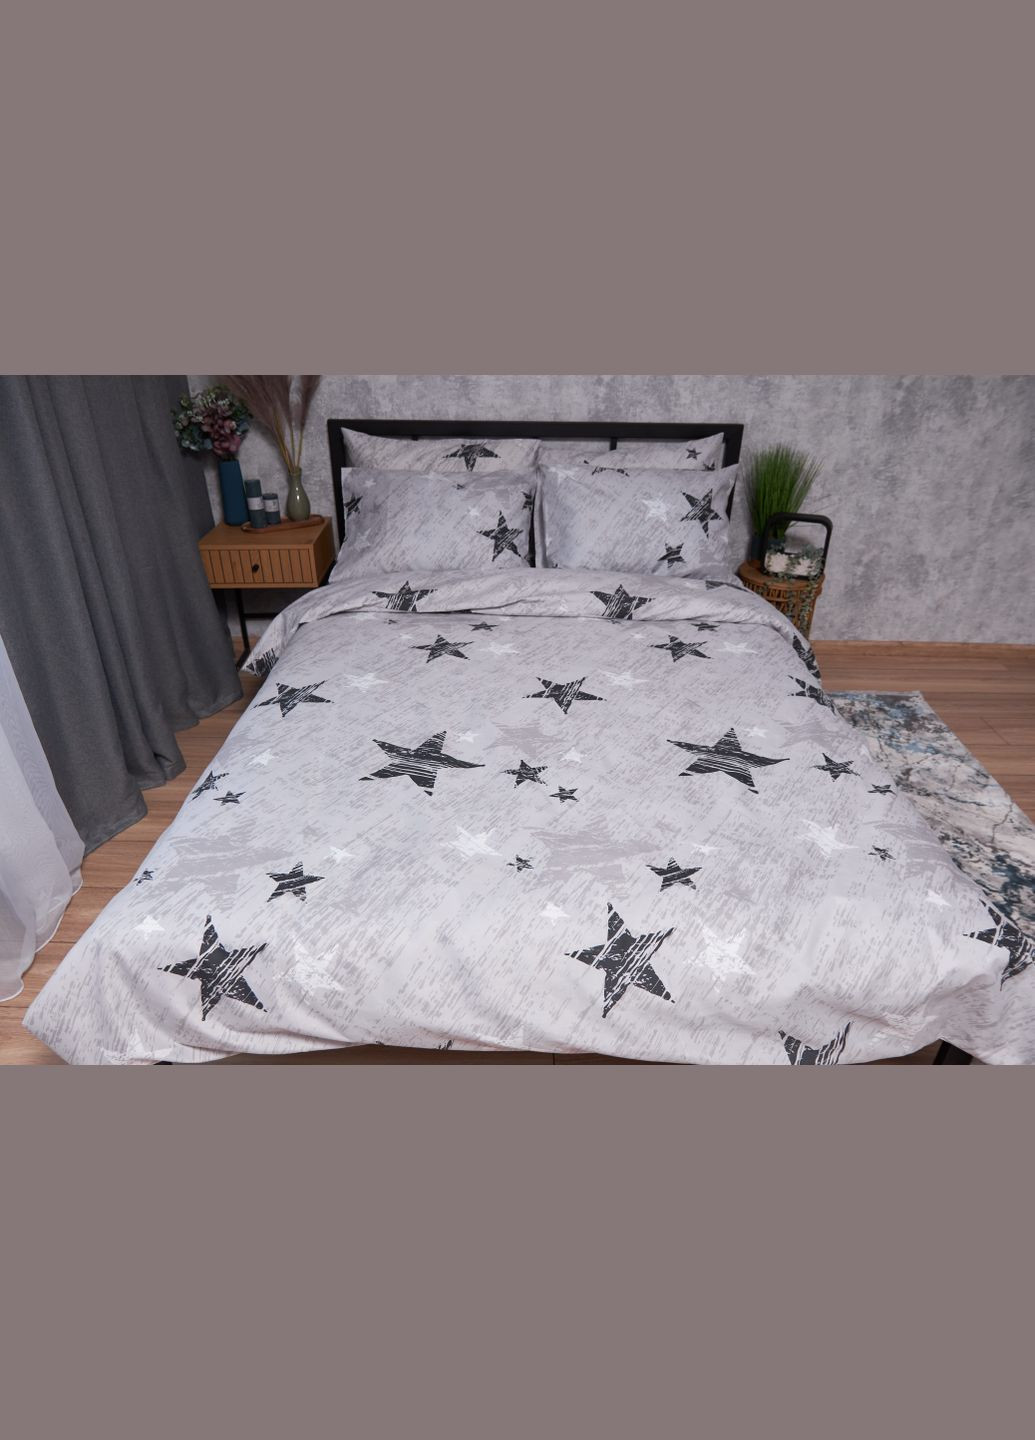 Комплект постельного белья Микросатин Premium «» двуспальный 175х210 наволочки 2х40х60 (MS-820002373) Moon&Star starlight (286762504)